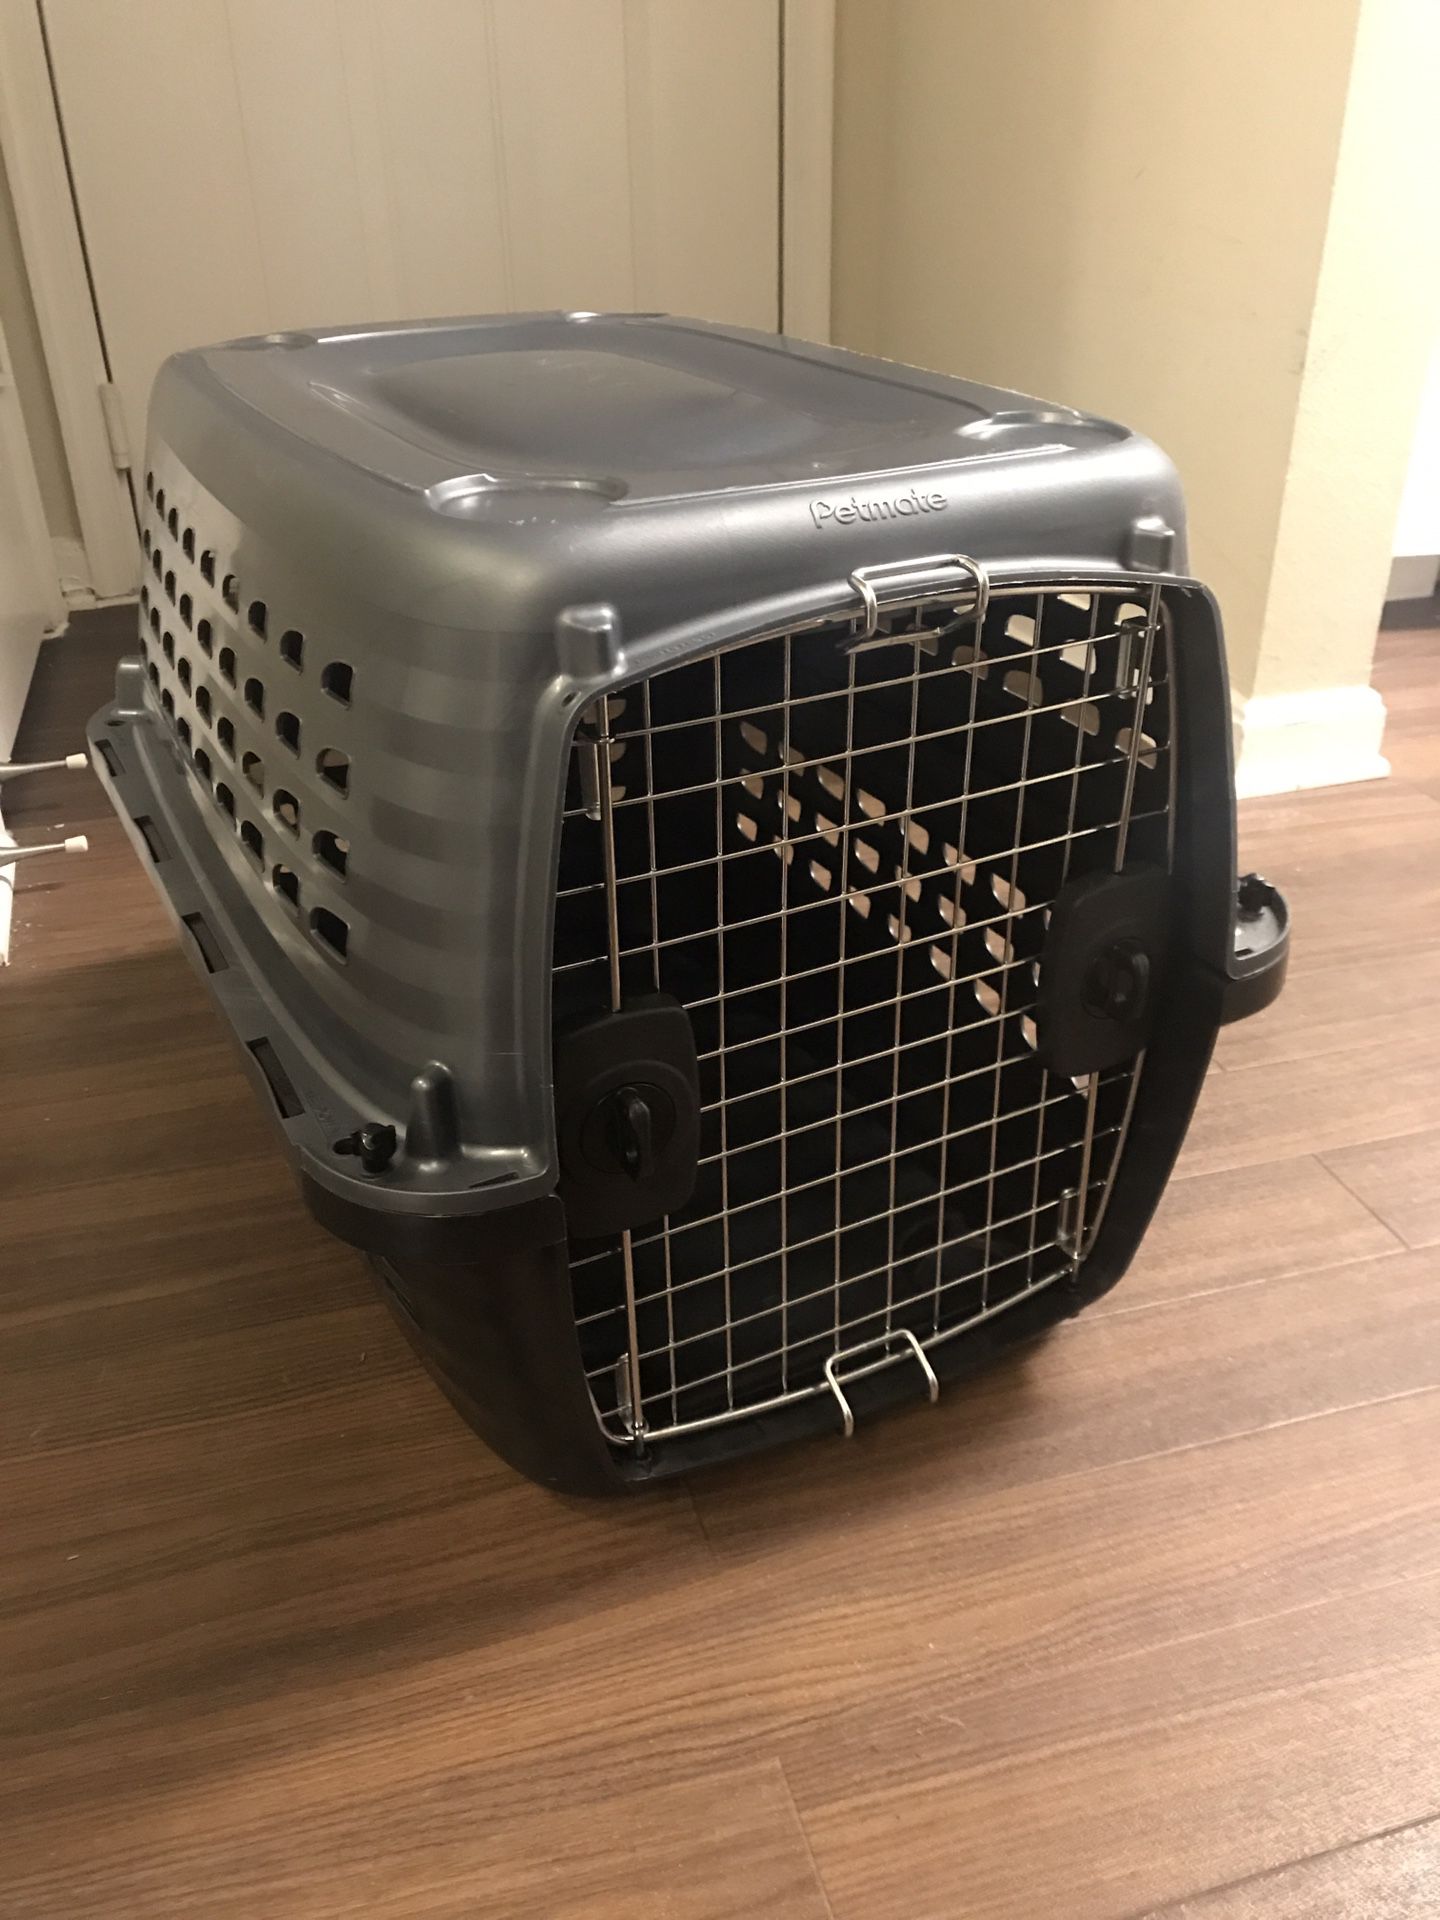 Travel crate for medium sized dog/cat